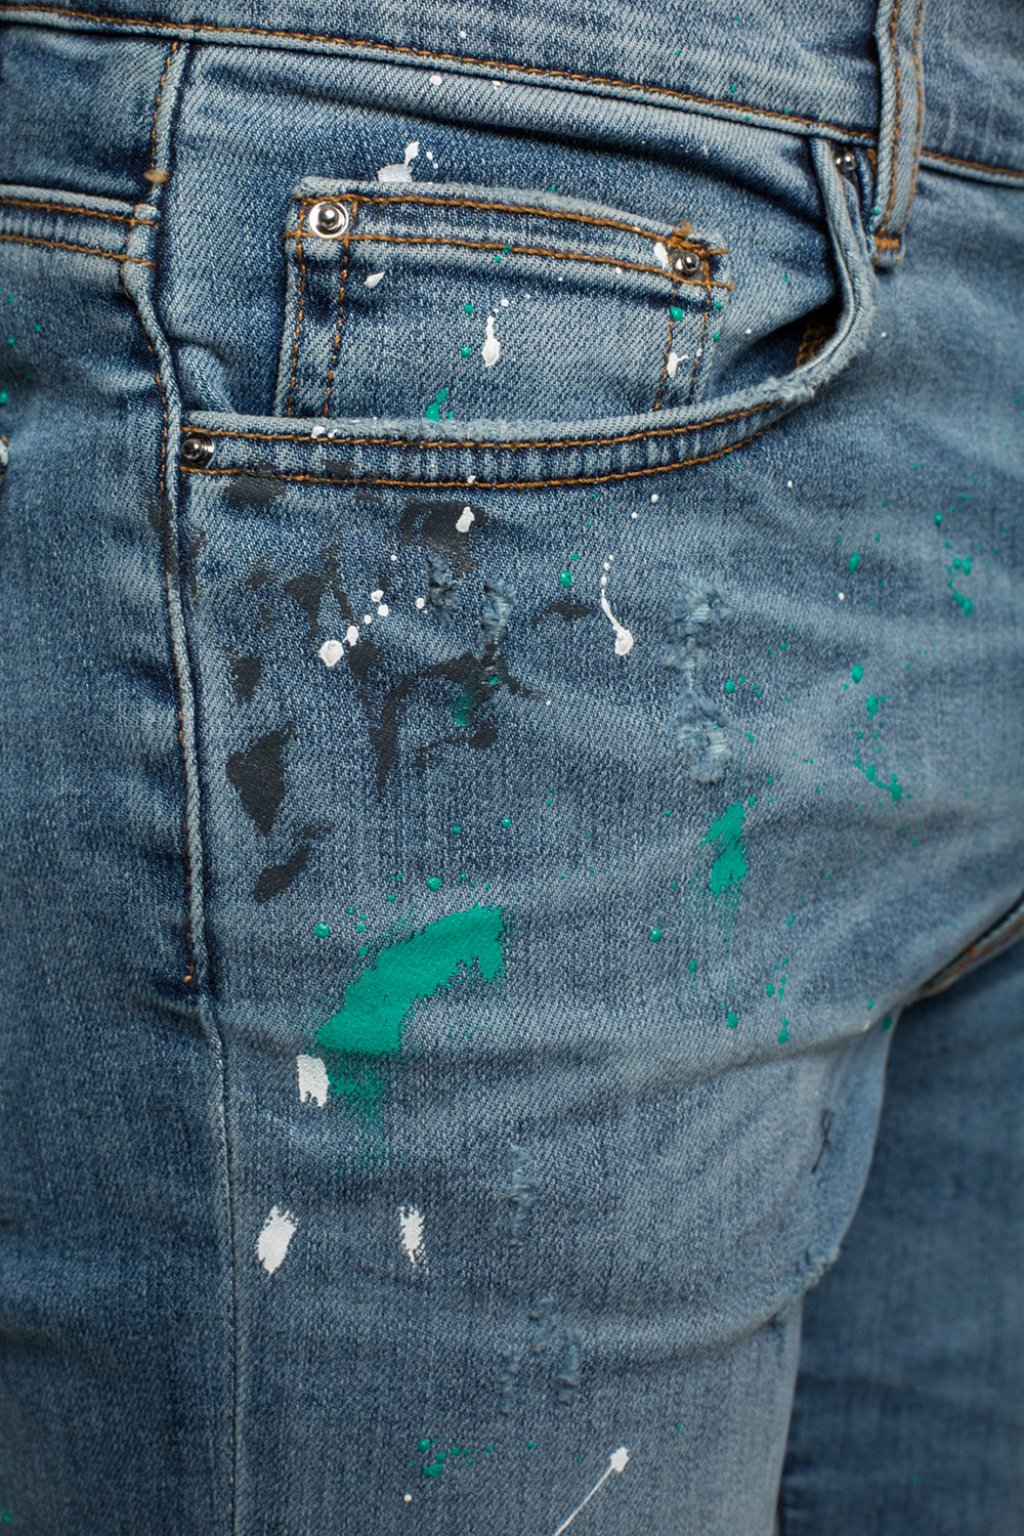 amiri paint jeans